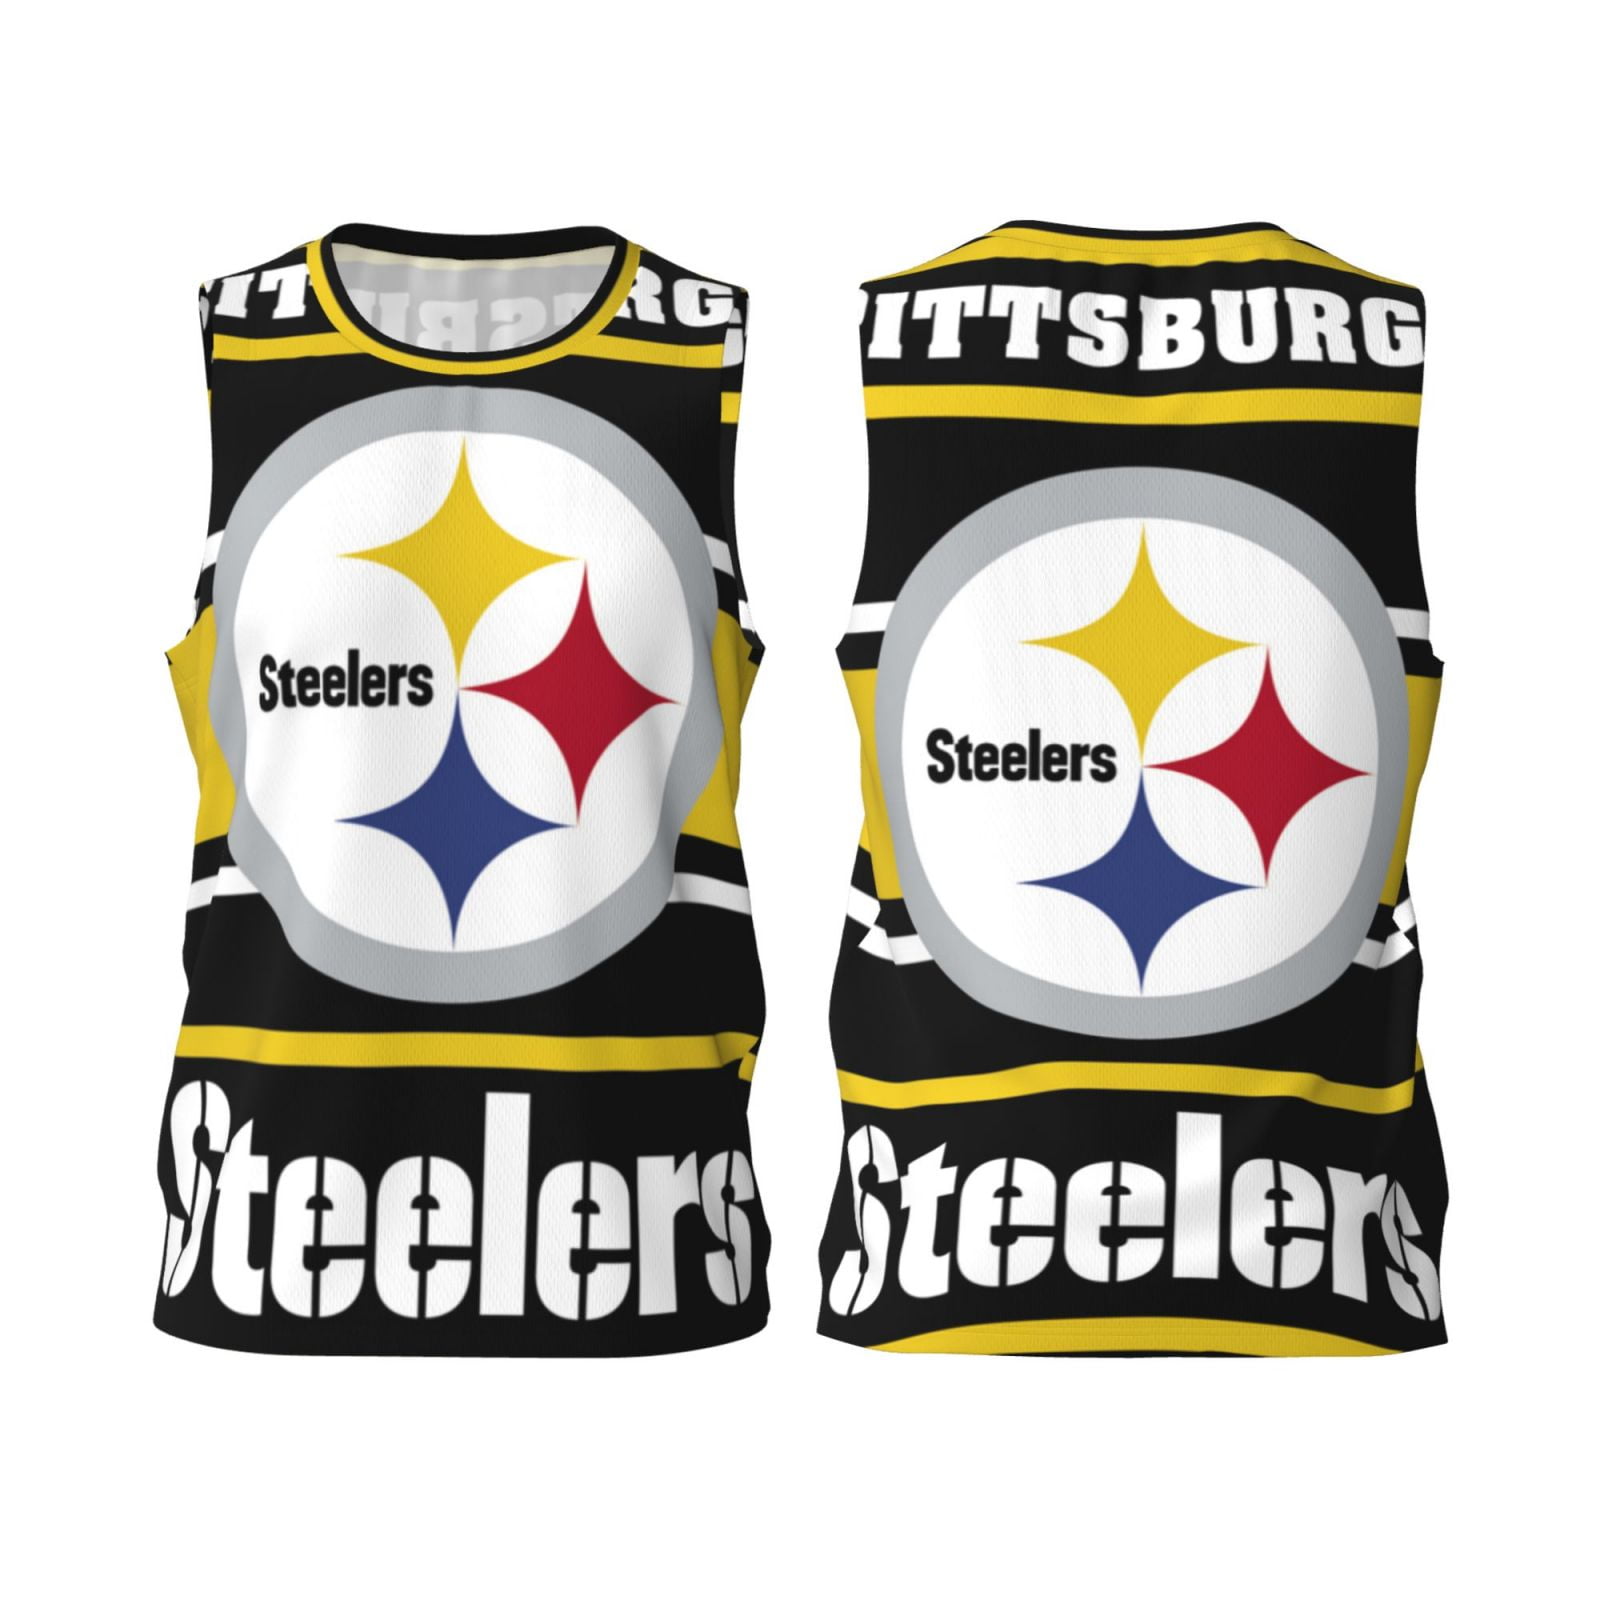 Pittsburgh-Steelers Mens Tank Top Basketball Jersey Workout Sleeveless ...